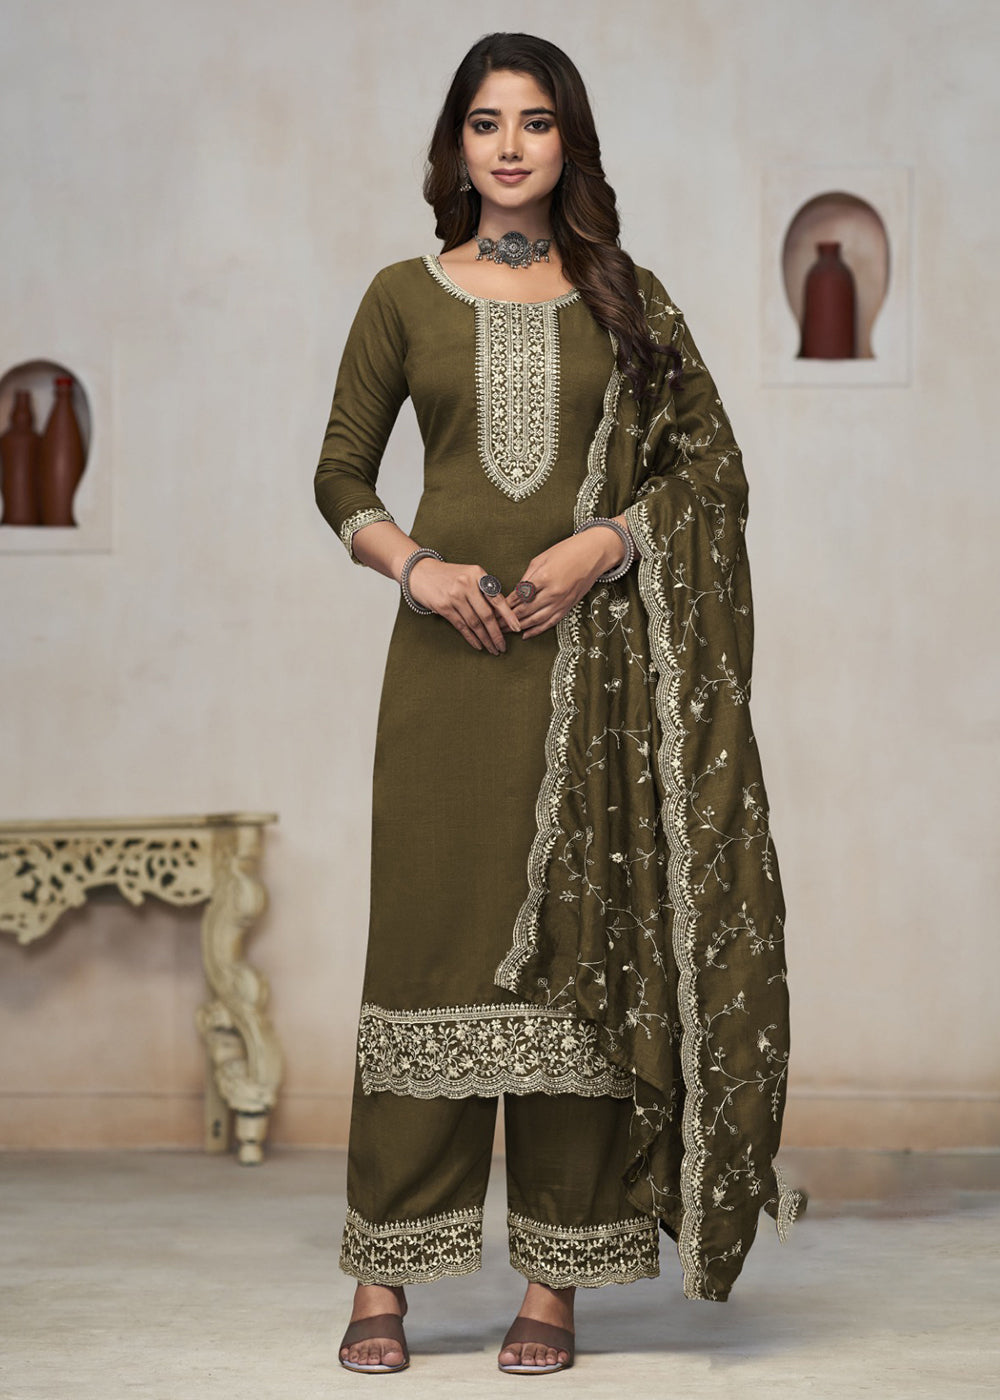 Buy Now Beautiful Green Vichitra Silk Fancy Salwar Suit Online in USA, UK, Canada, Germany, Australia & Worldwide at Empress Clothing.